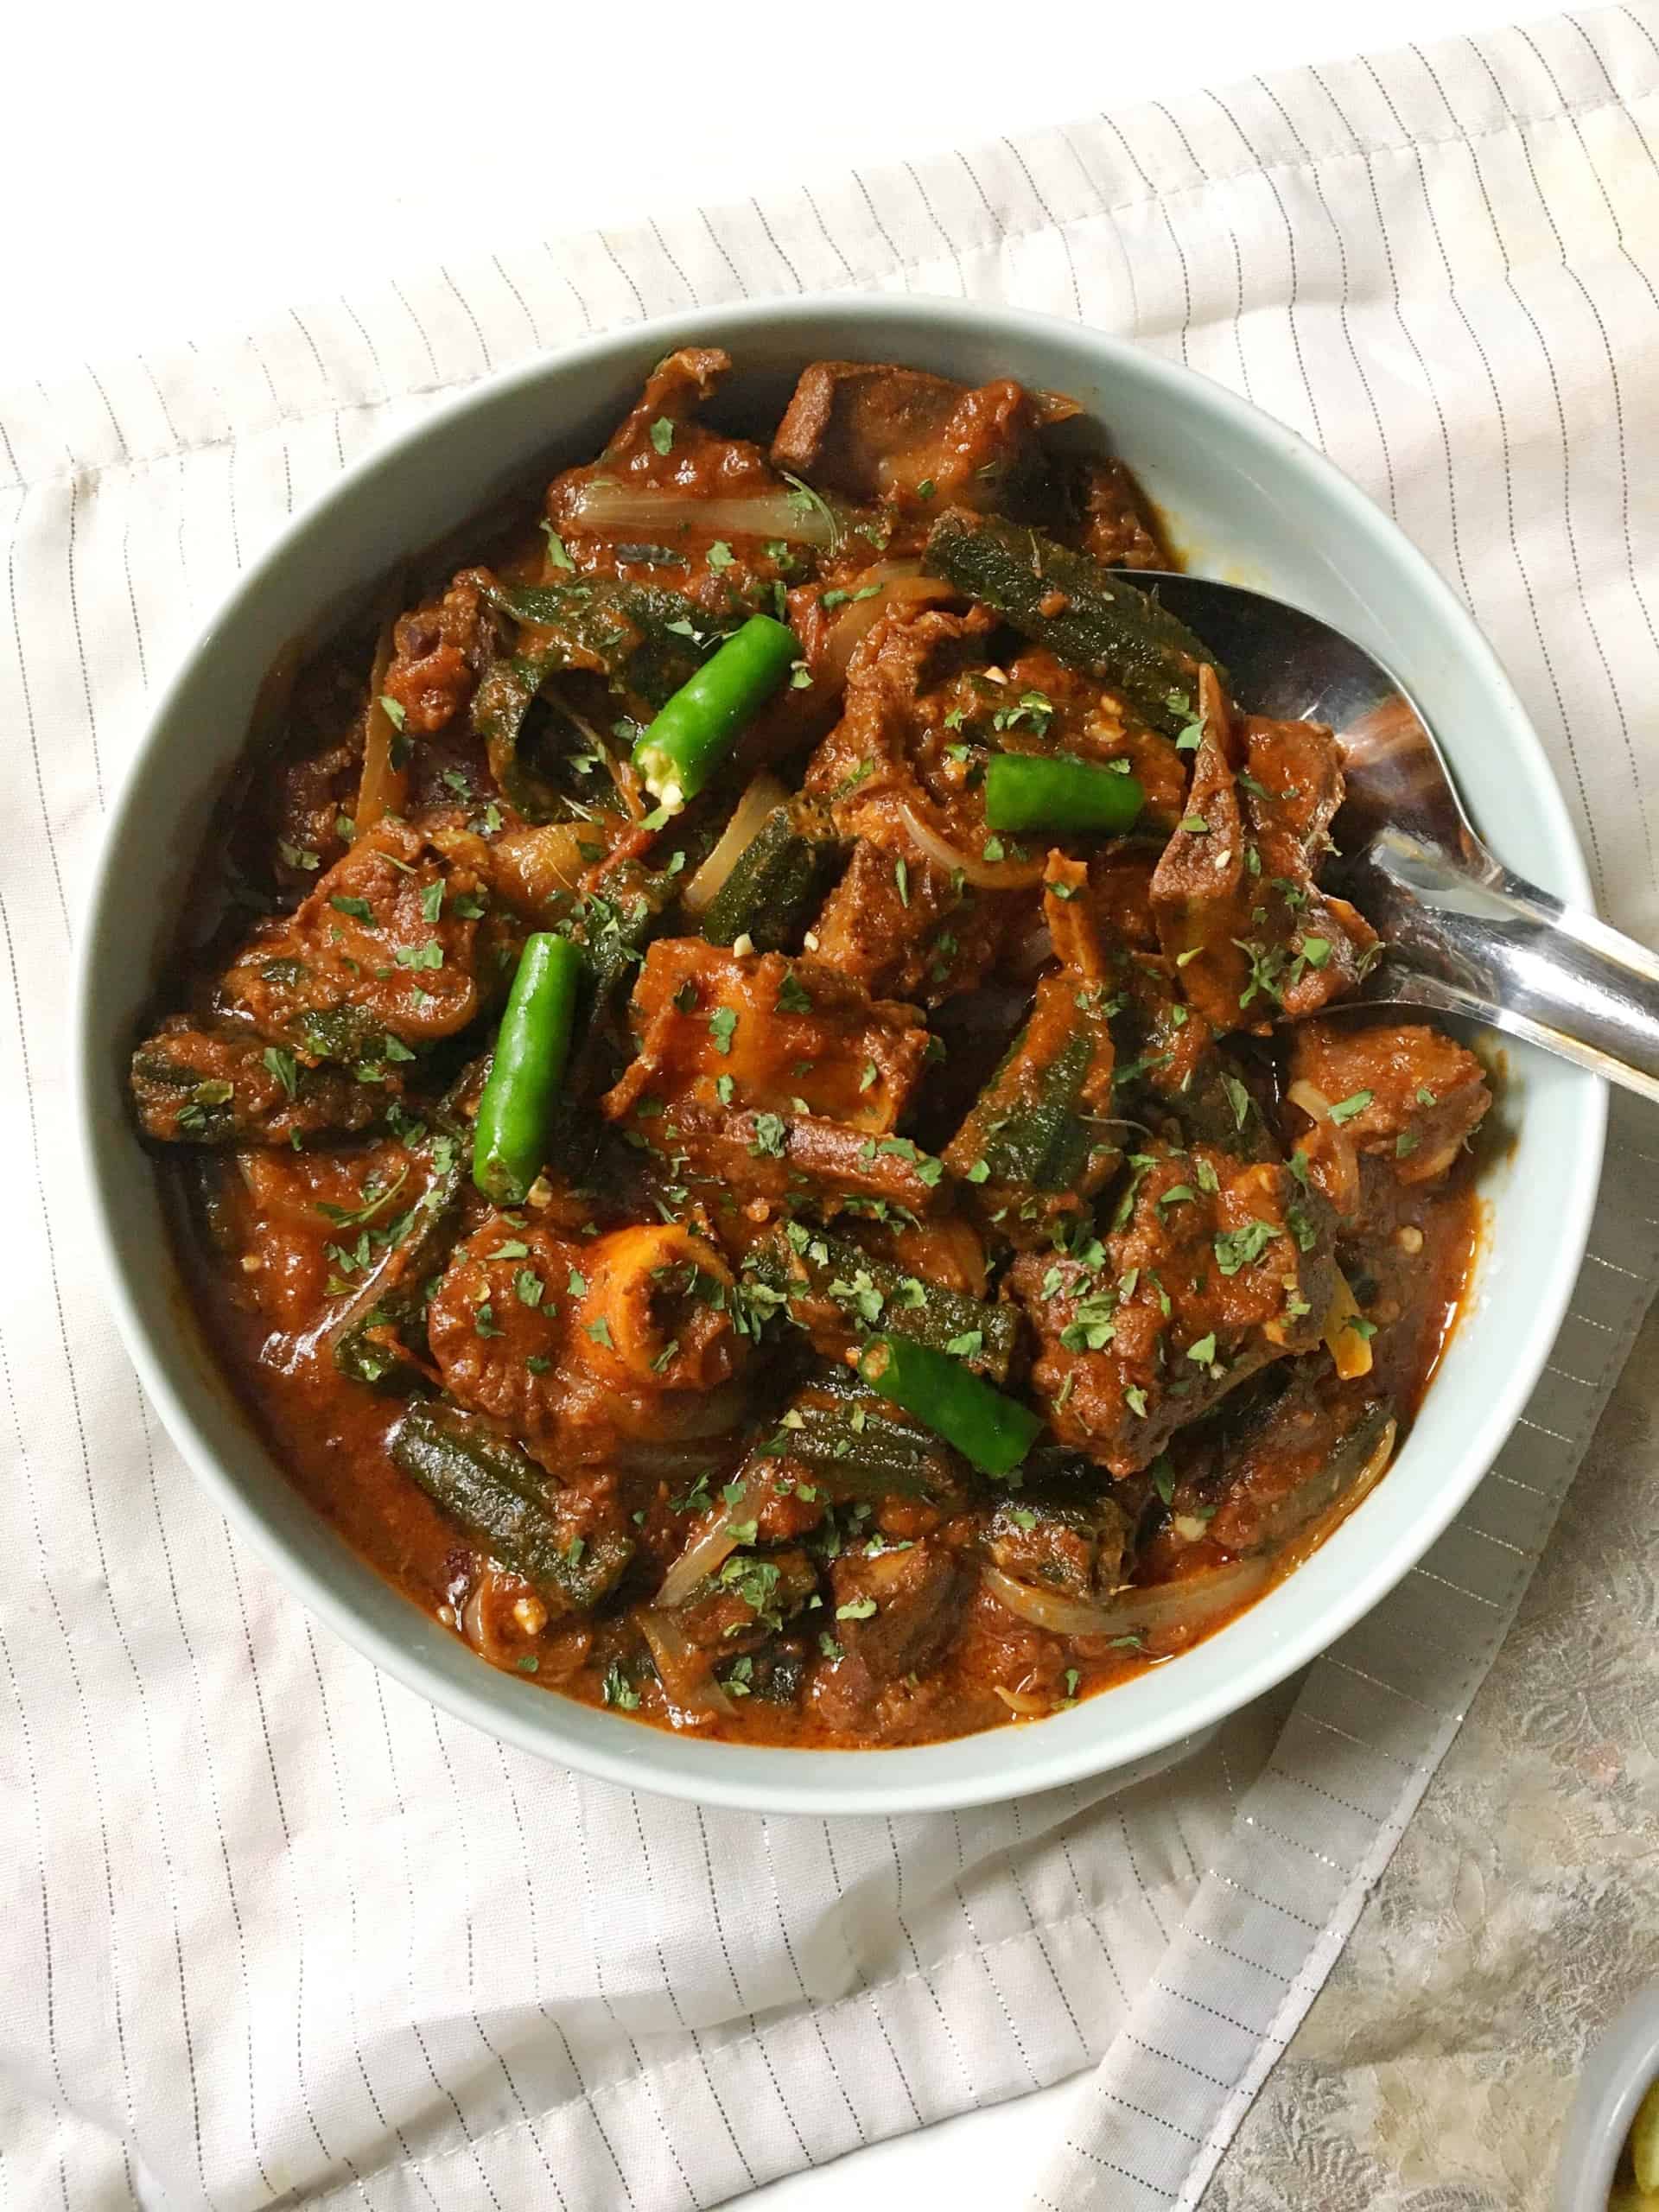 Bhindi Gosht Recipe - Okra with Lamb / Mutton Curry